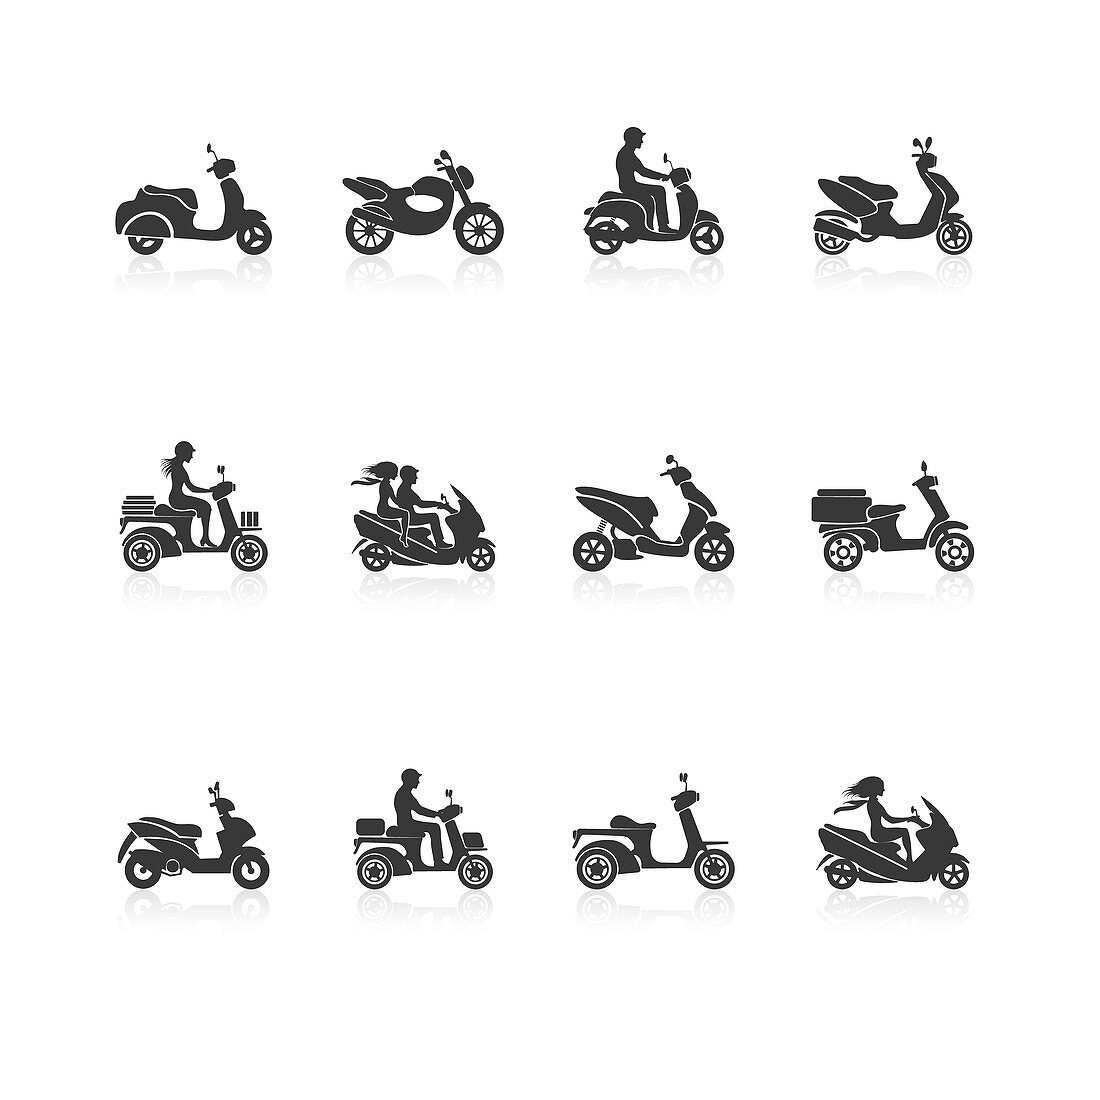 Motorcycle icons, illustration